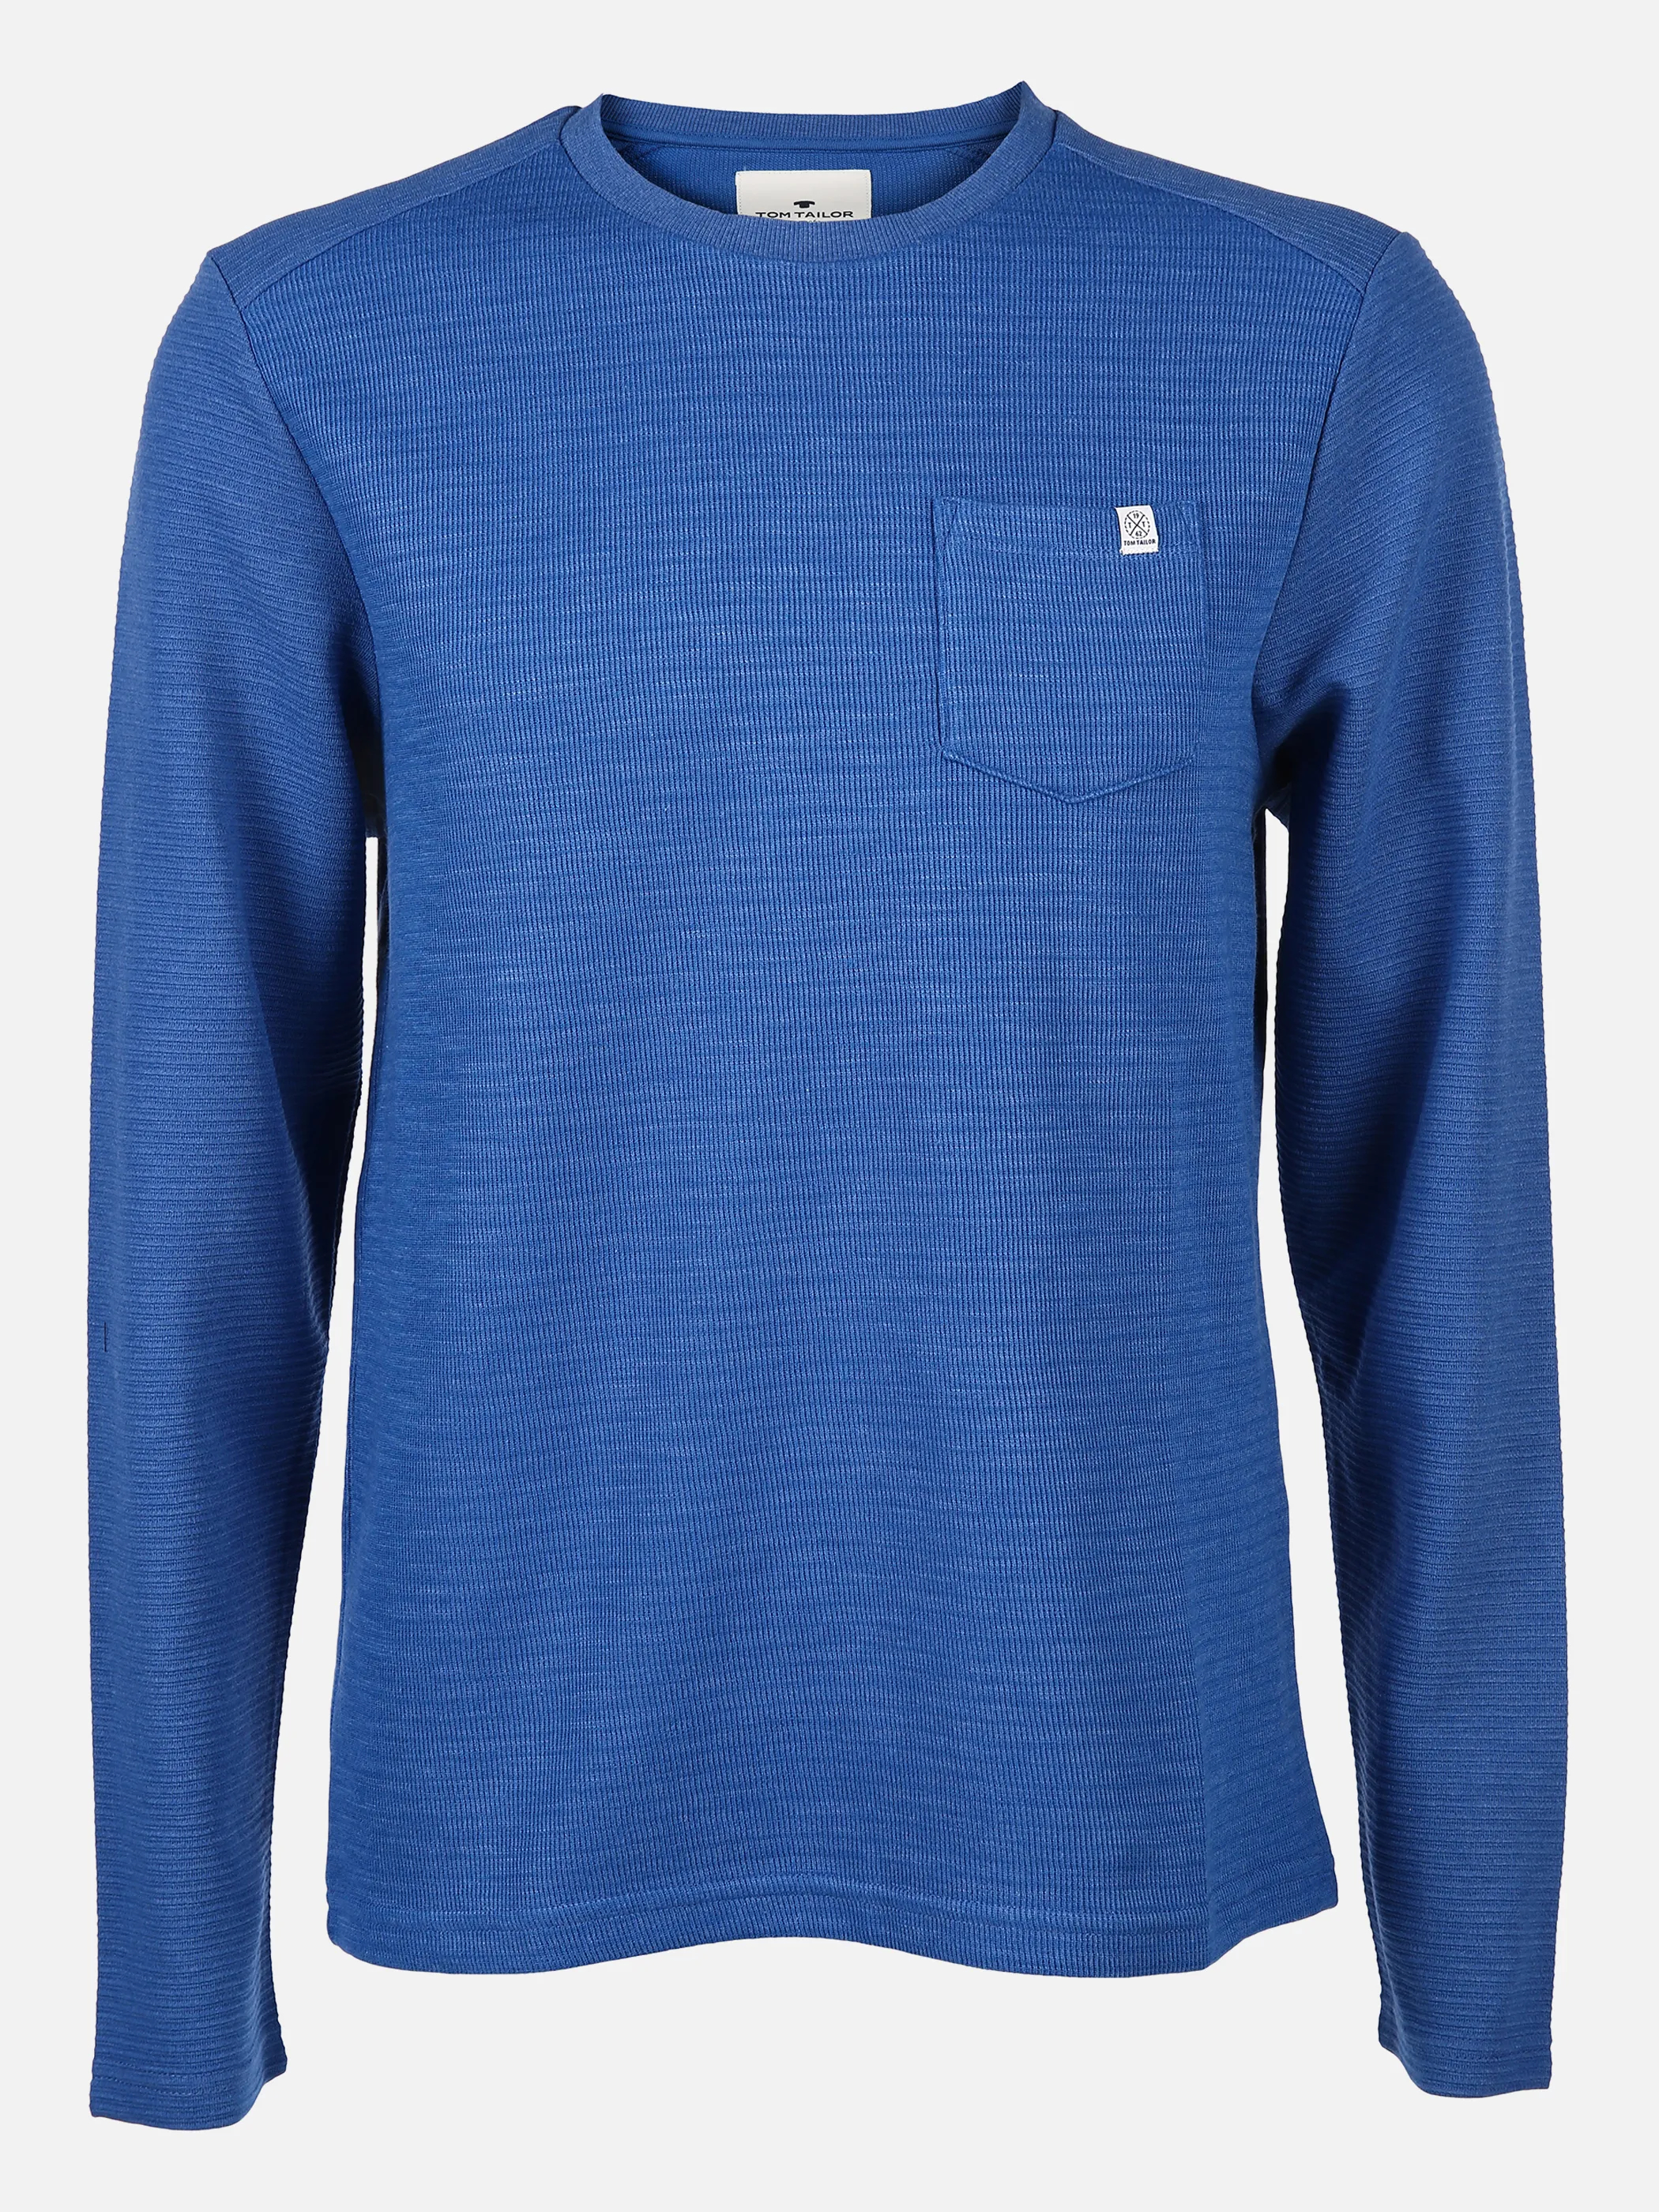 Tom Tailor 1015016 fabric mix sweatshirt Blau 833023 20480 1